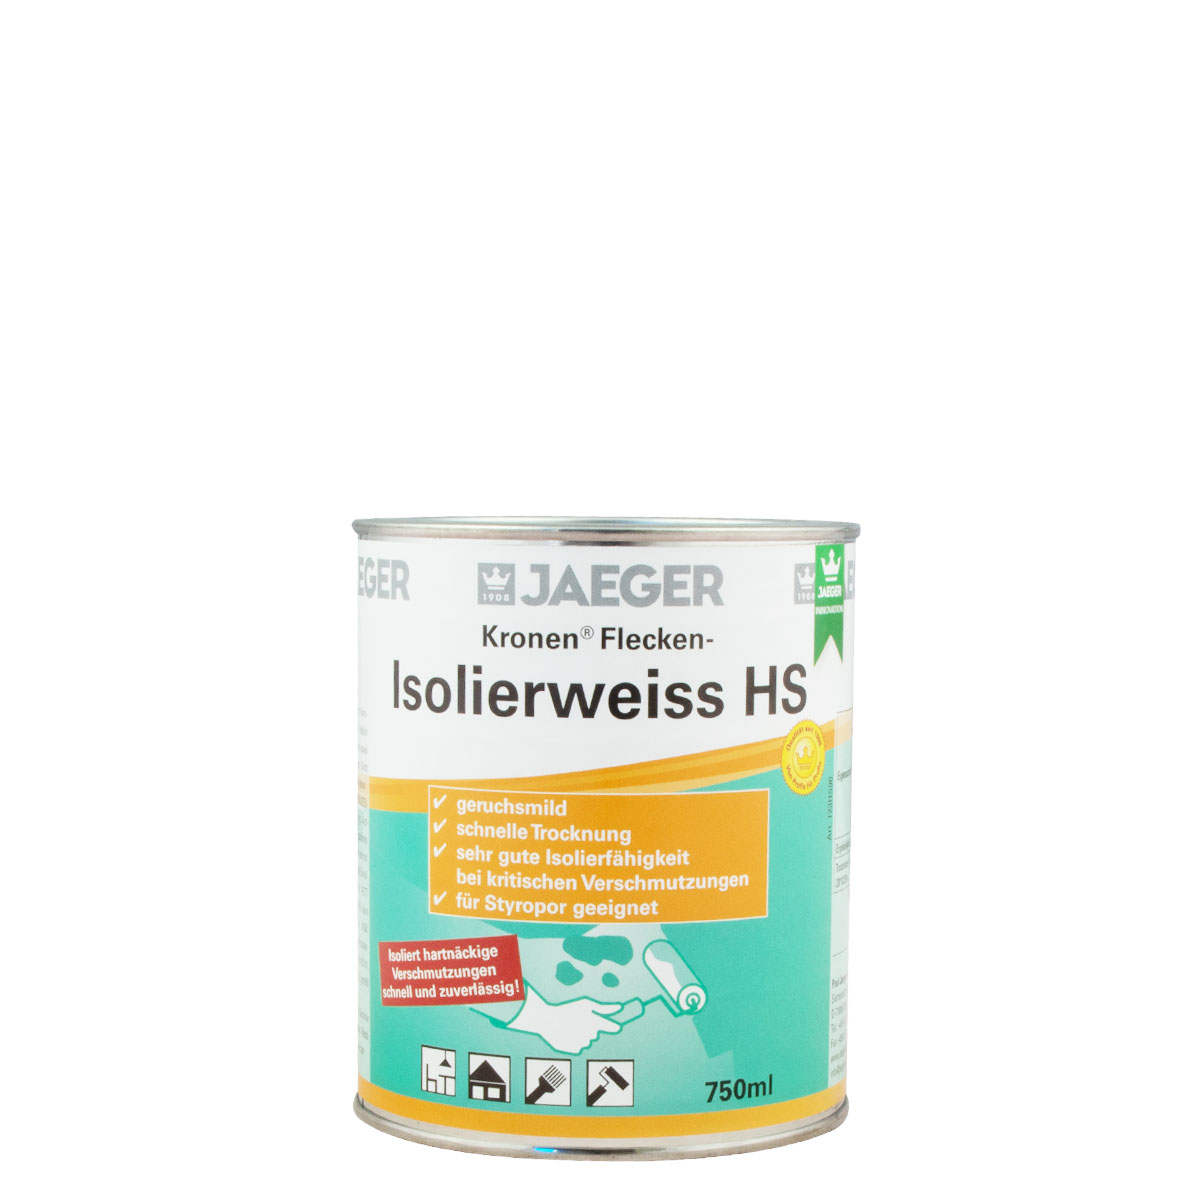 Jaeger Kronen Flecken-Isolierweiss HS123 750ml